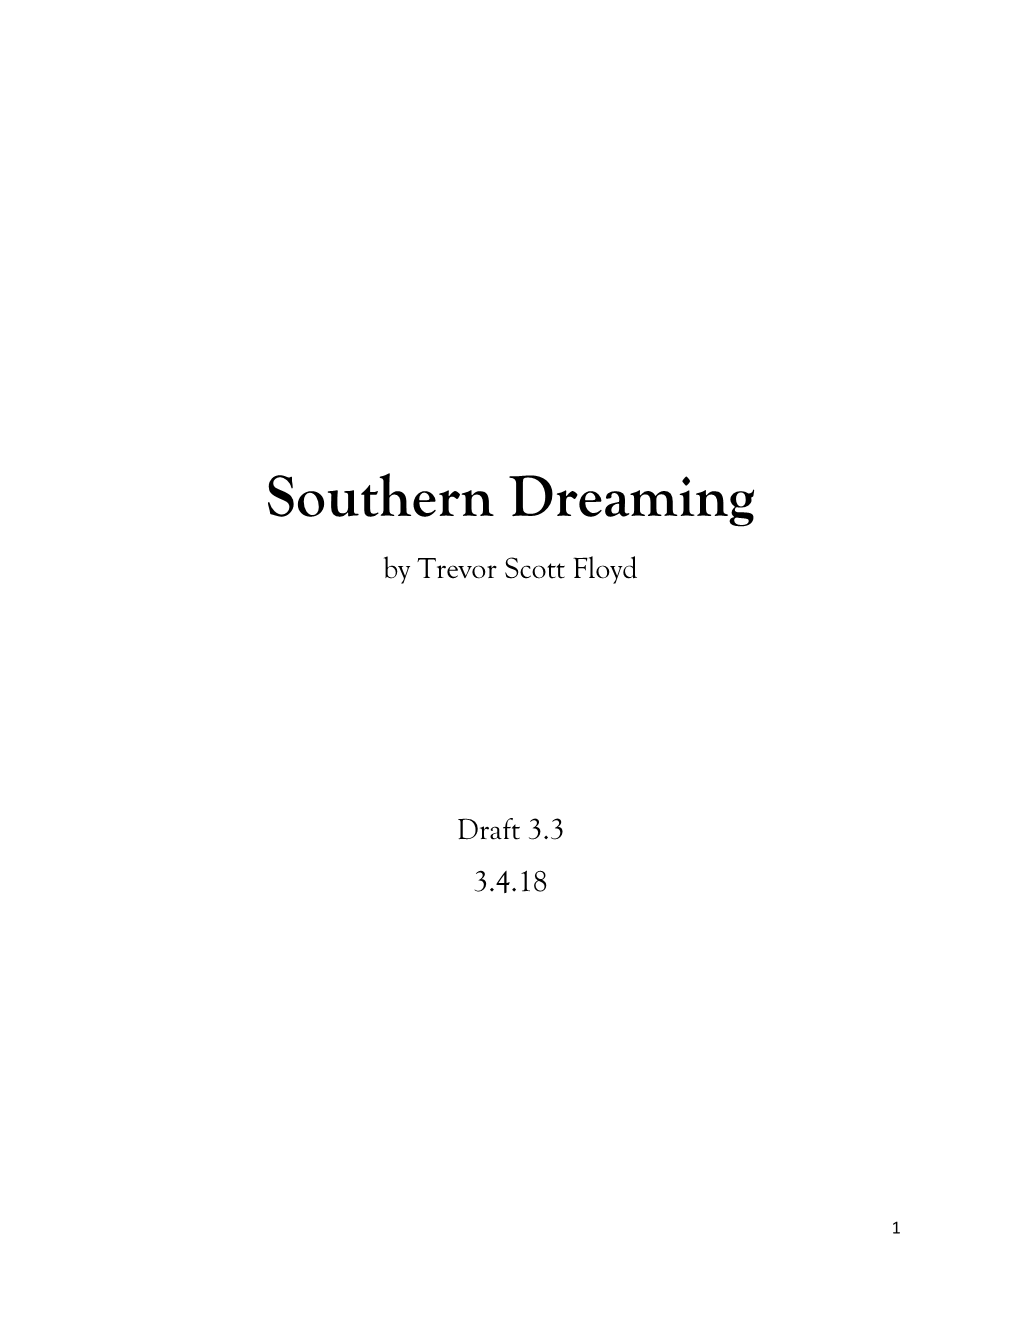 Southern Dreaming by Trevor Scott Floyd